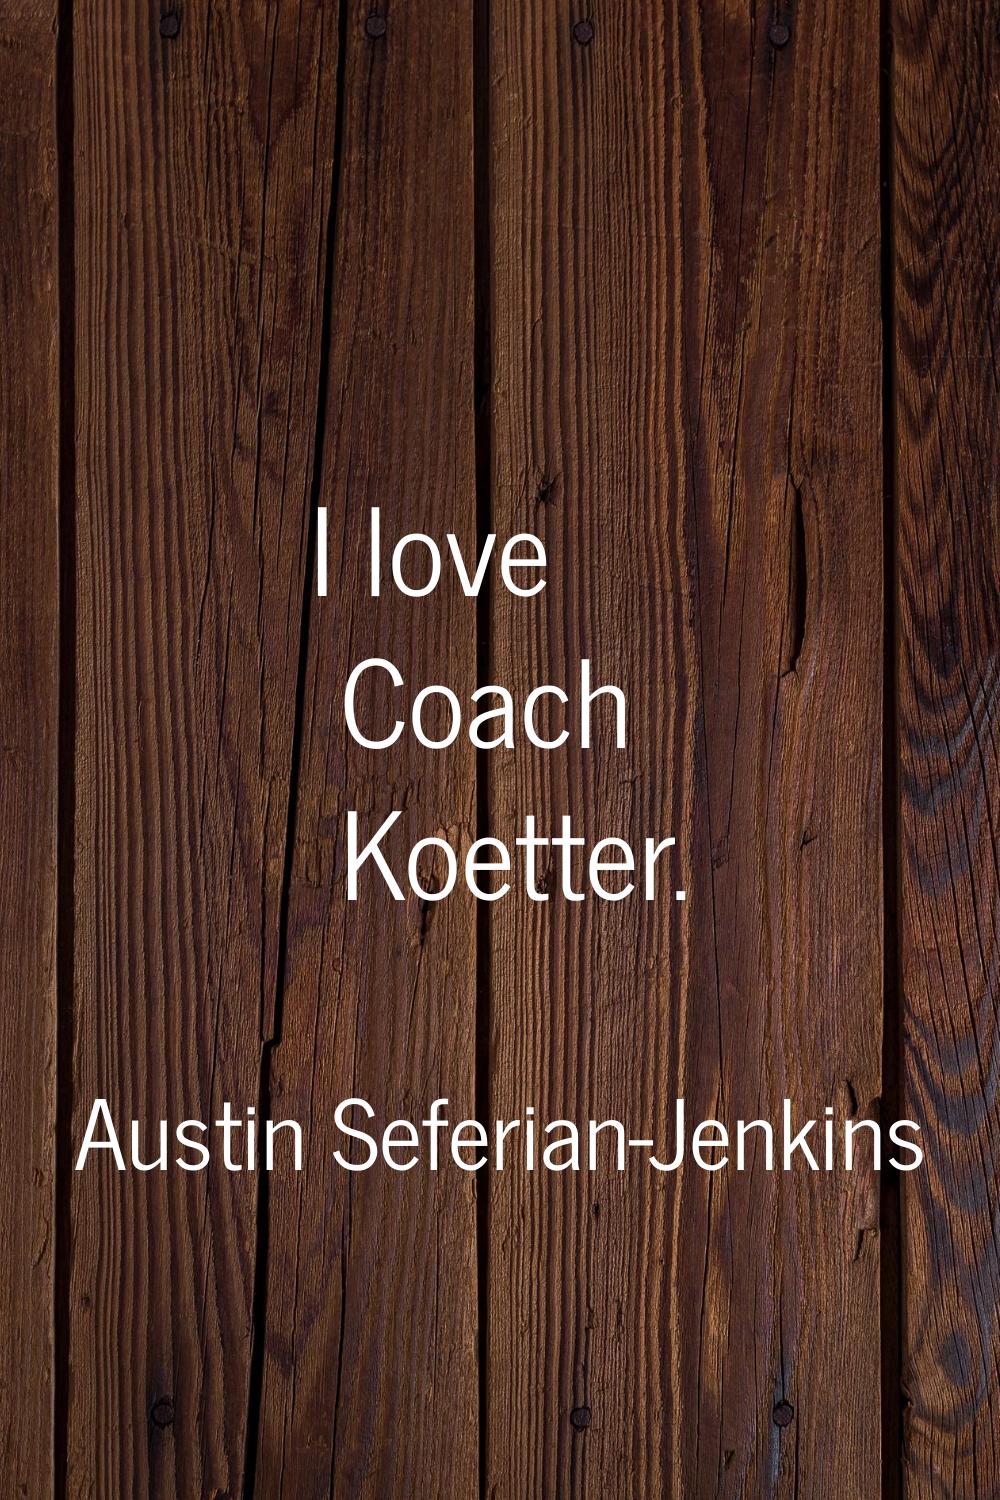 I love Coach Koetter.